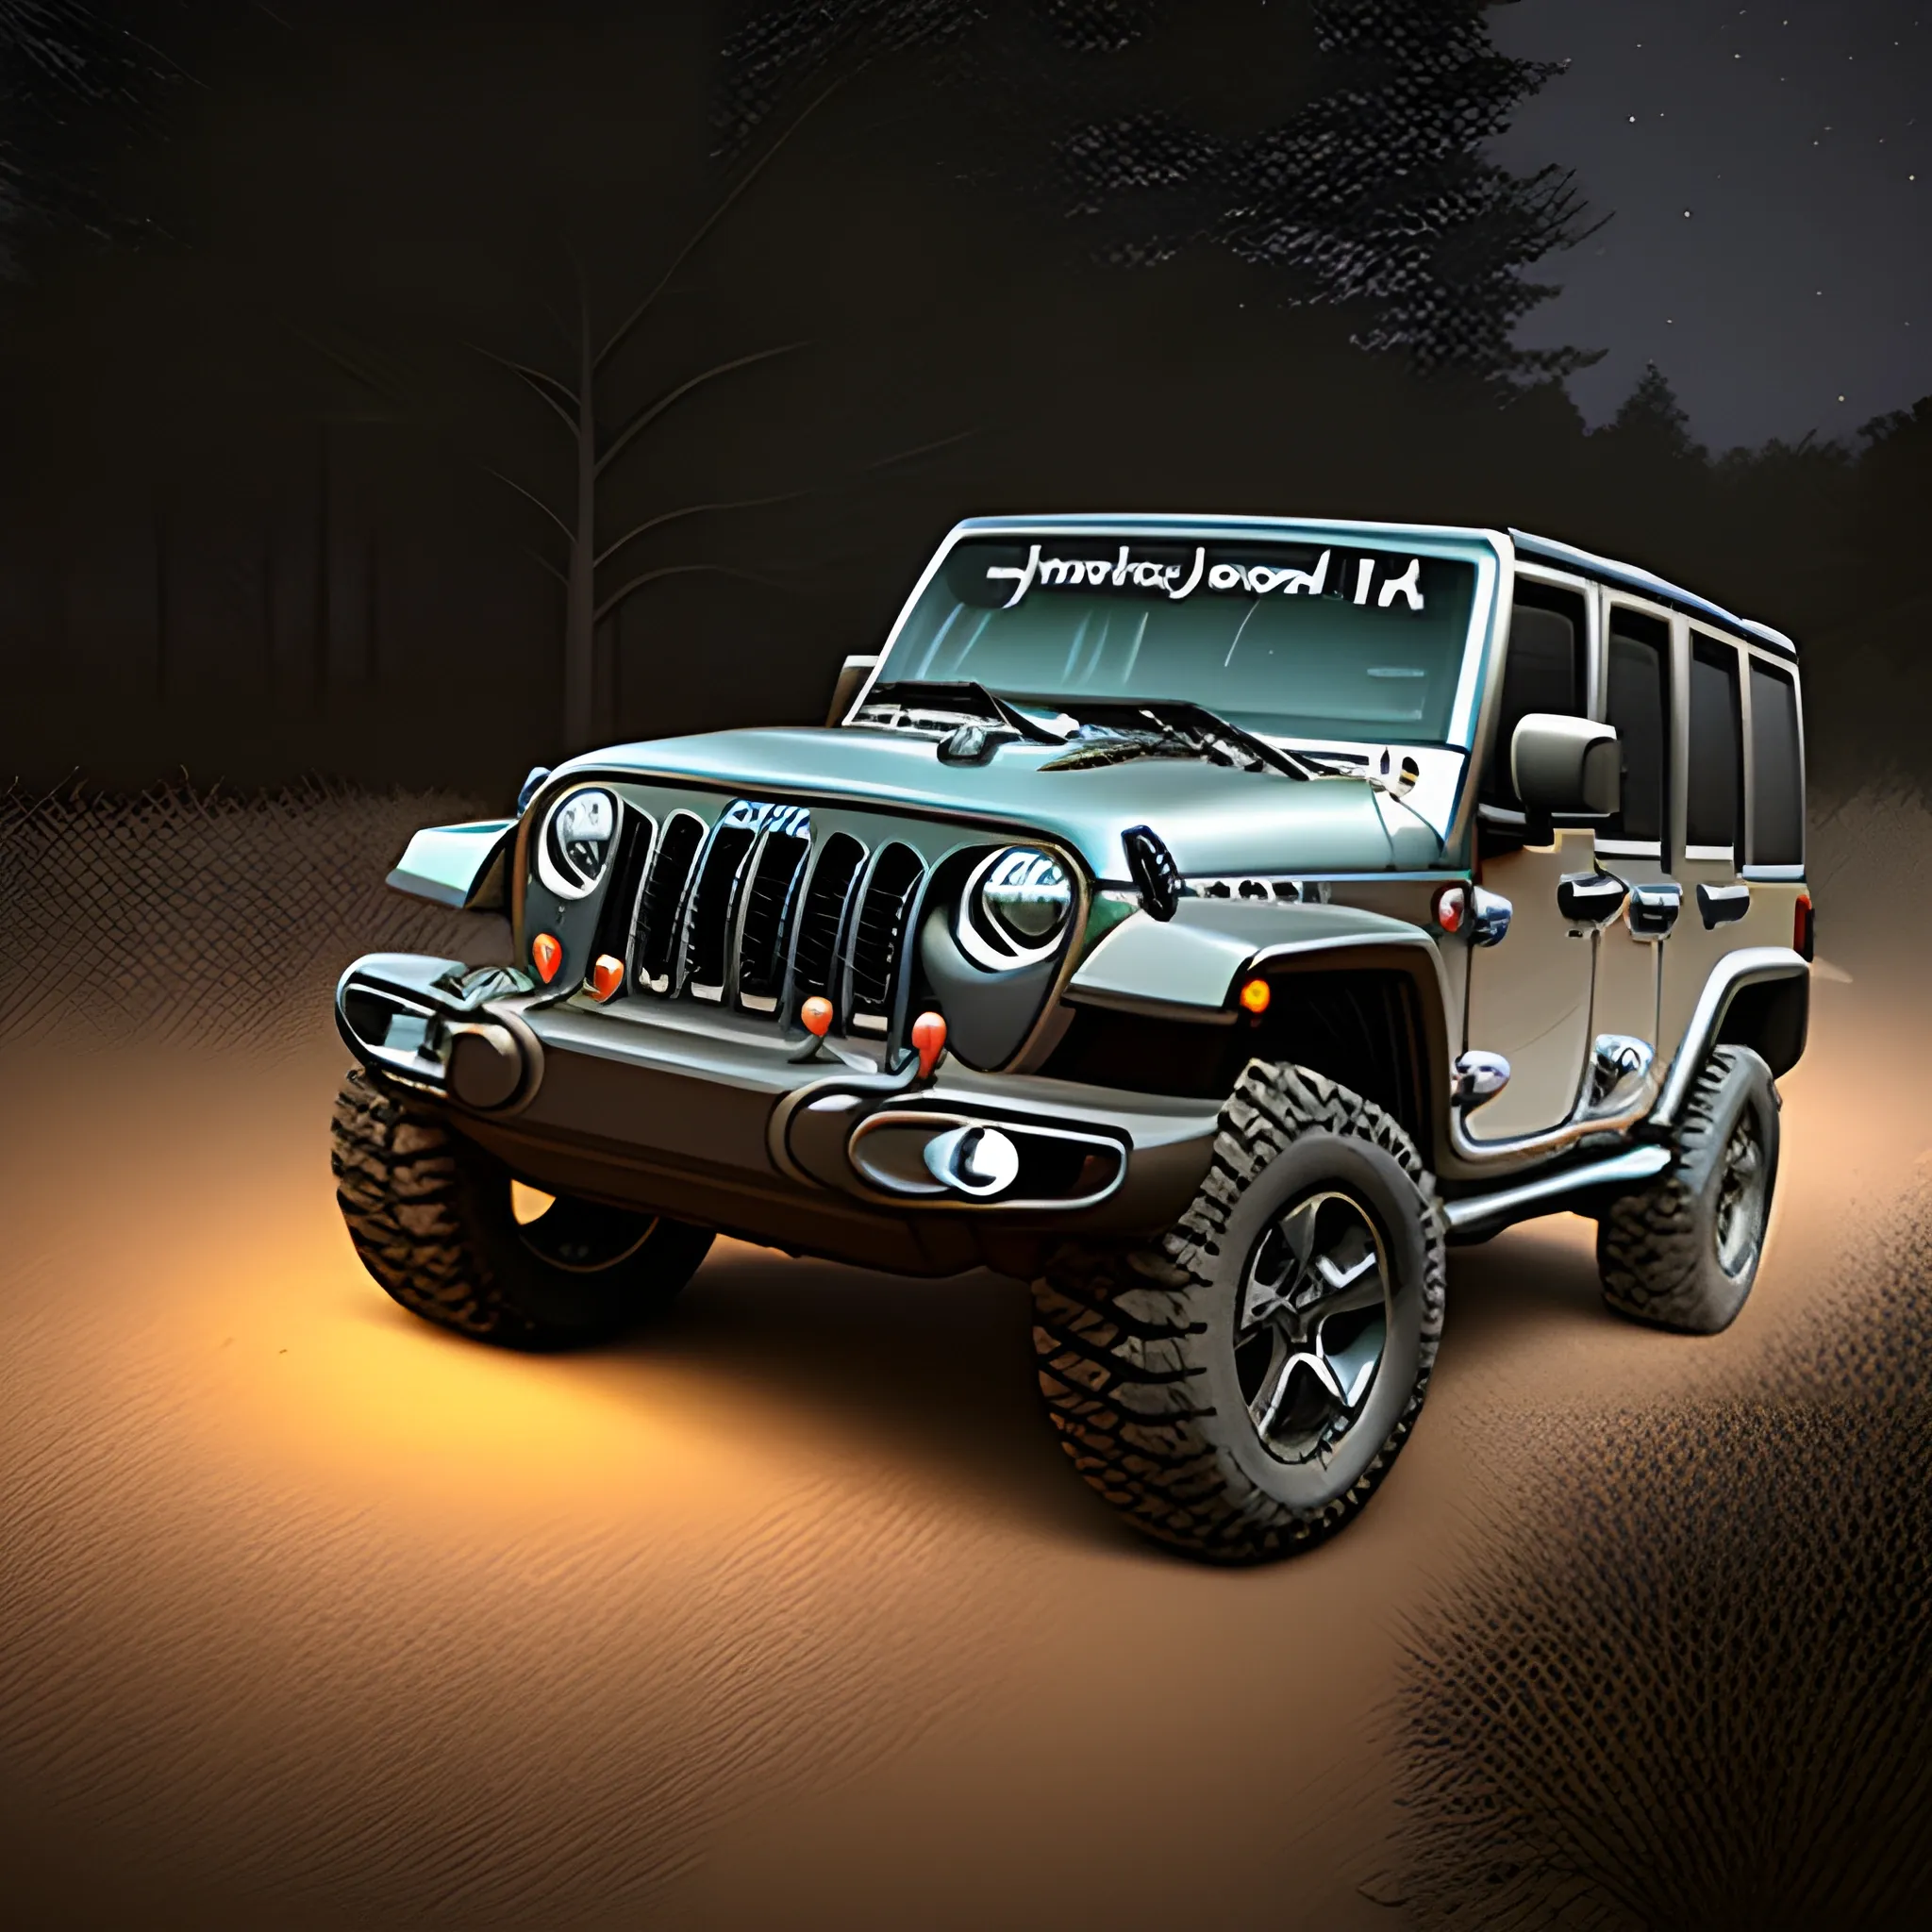 
jeep off road game render in night lighting seen
